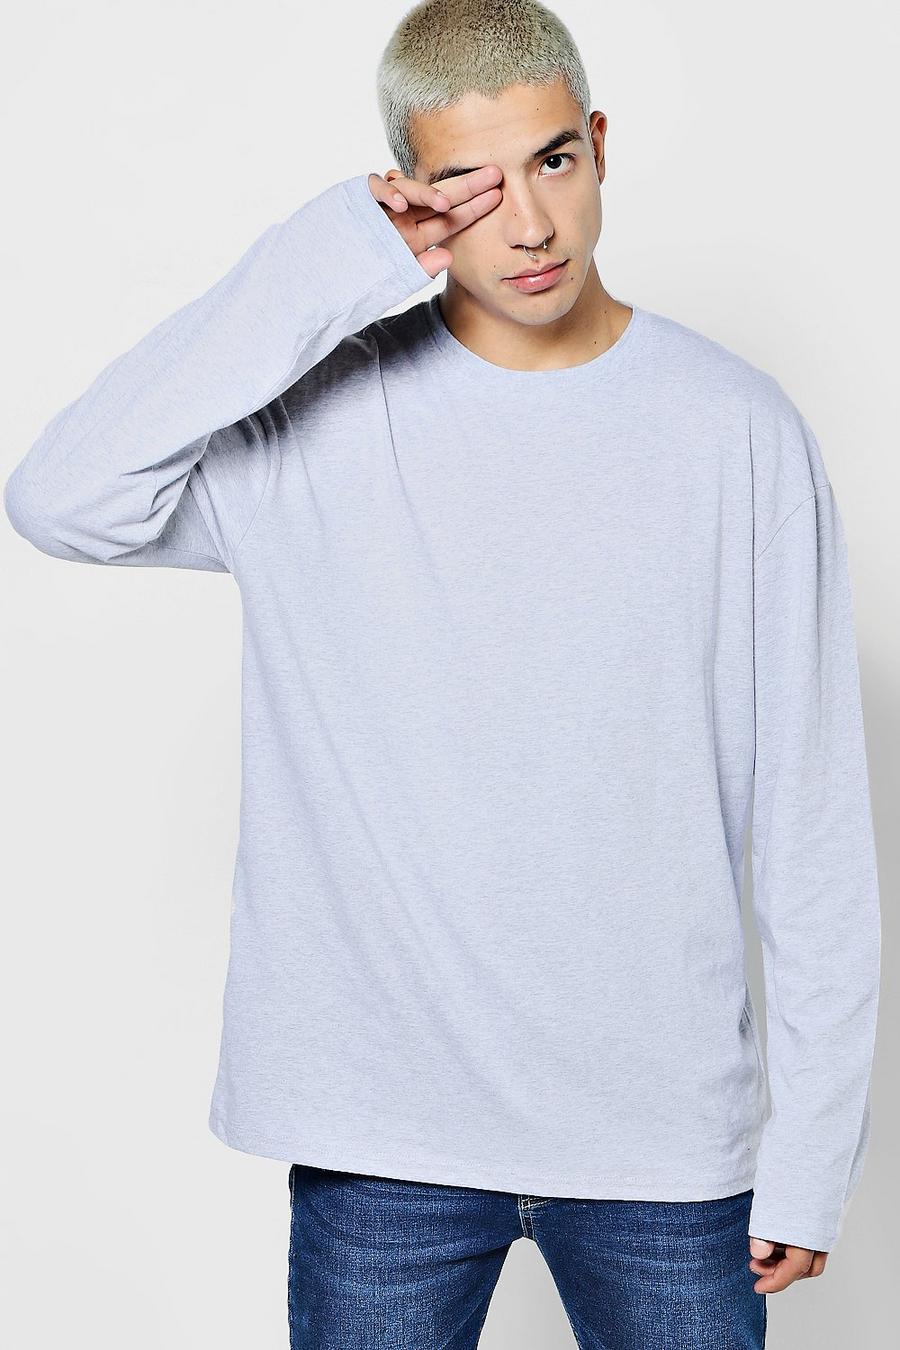 https://media.boohoo.com/i/boohoo/mzz67648_grey%20marl_xl/male-grey%20marl-oversized-long-sleeve-t-shirt/?w=900&qlt=default&fmt.jp2.qlt=70&fmt=auto&sm=fit